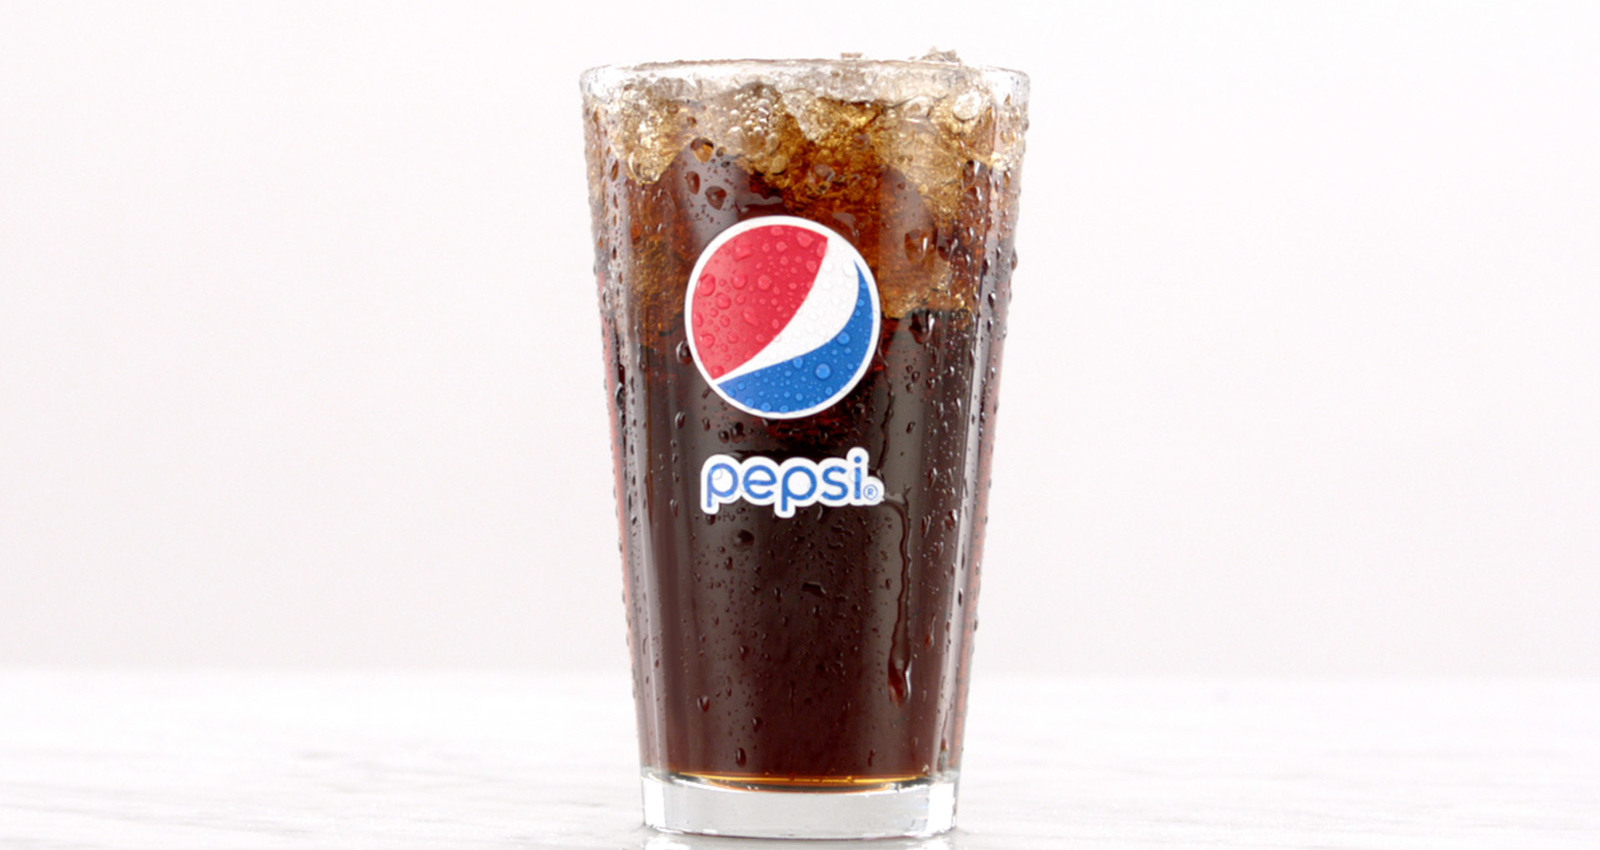 Pepsi Agreement